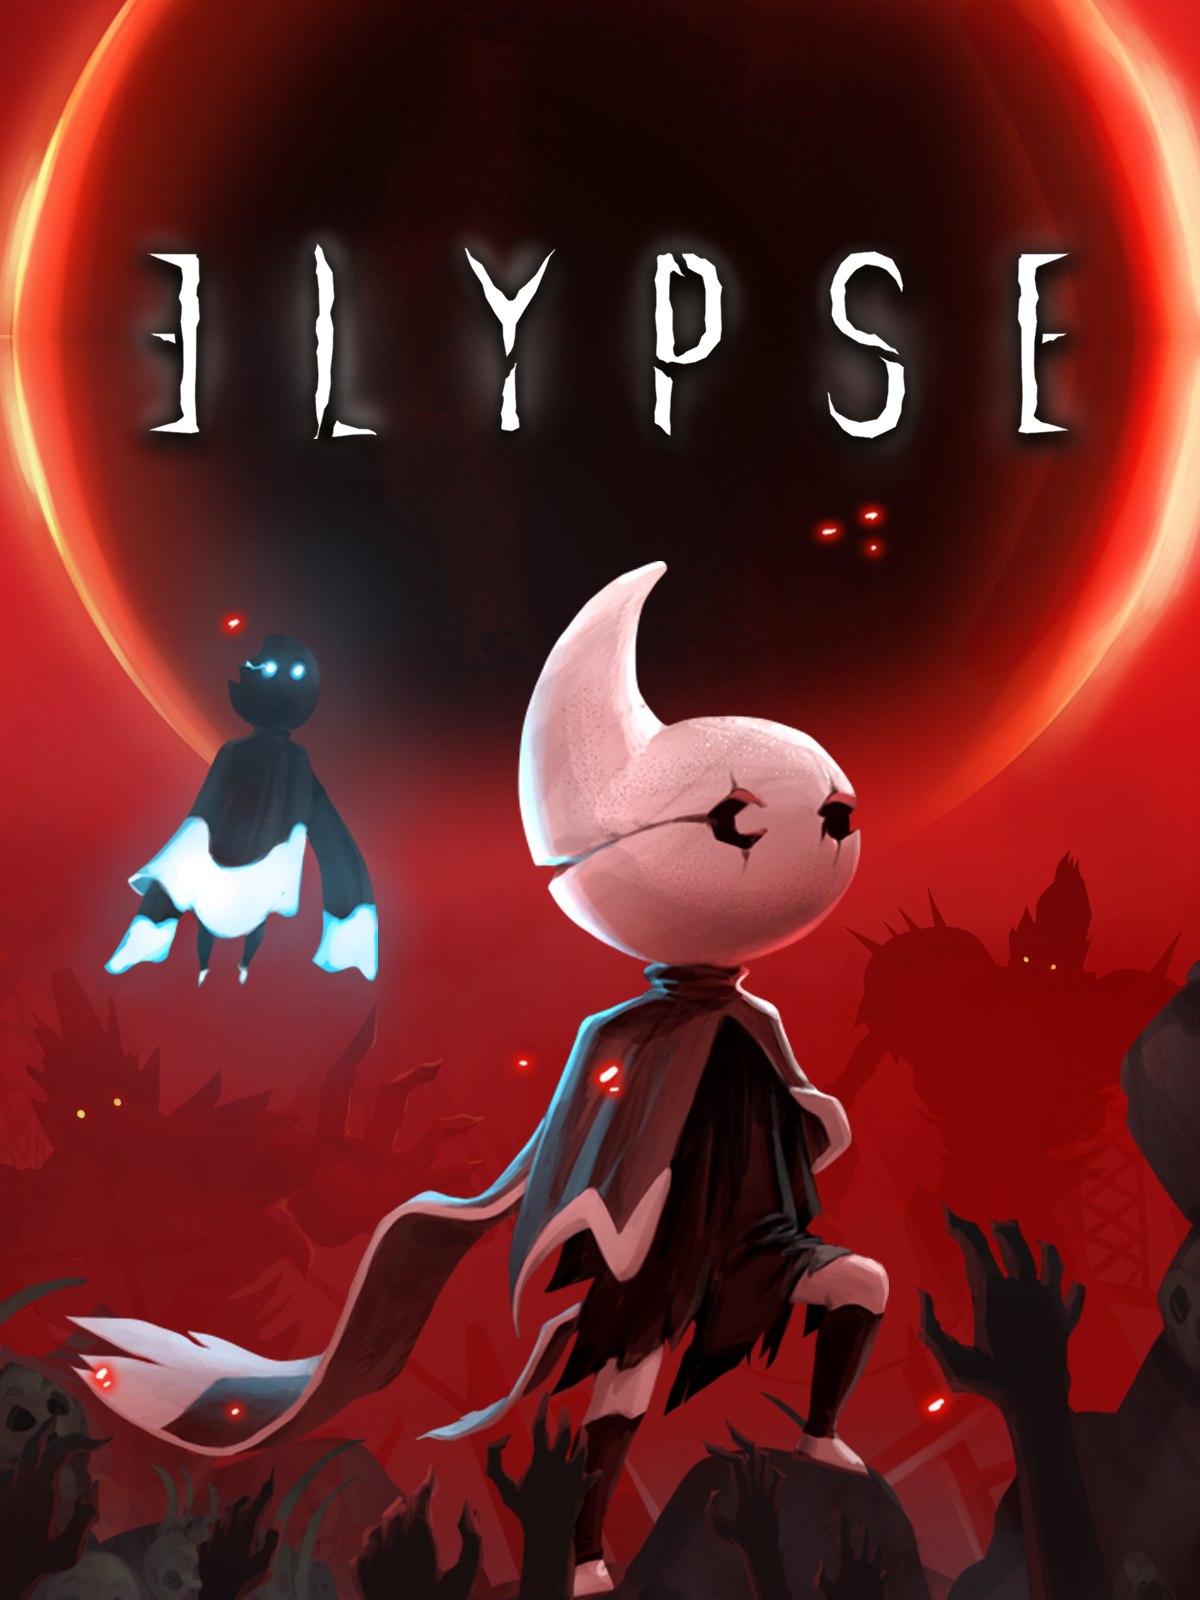 Elypse [PC, Цифровая версия] (Цифровая версия) цена и фото